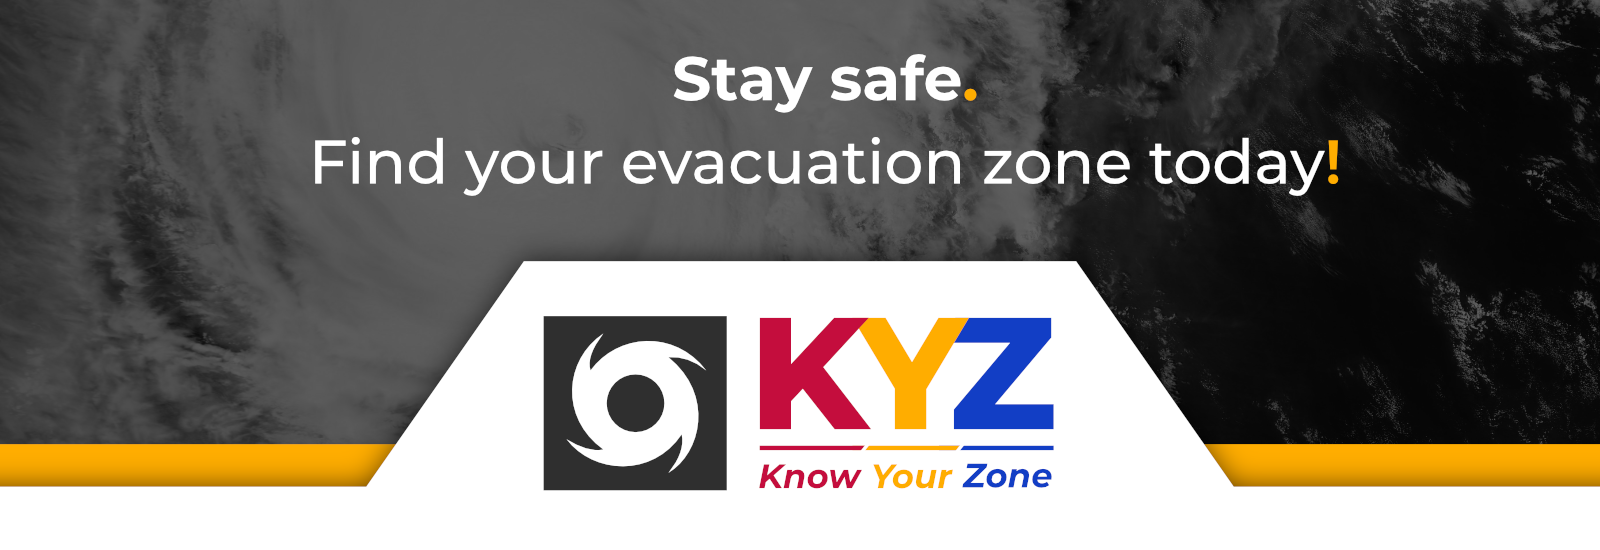 Stay Safe. Find your evacuation zone today! Know Your Zone (KYZ)